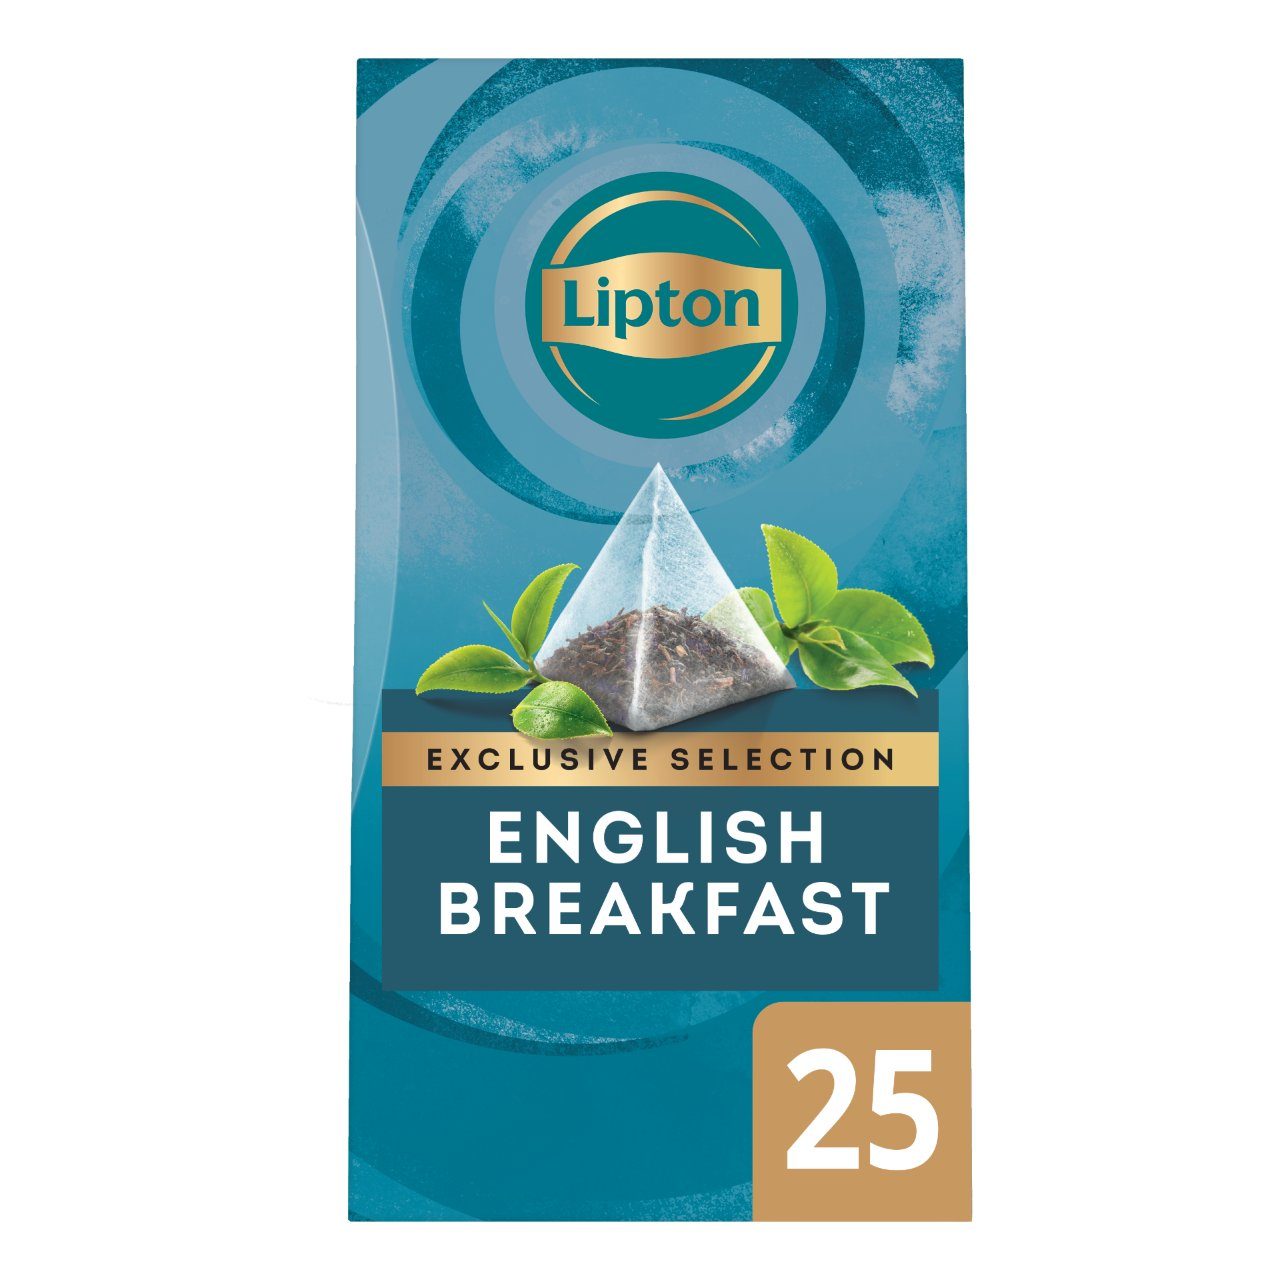 Thee english breakfast